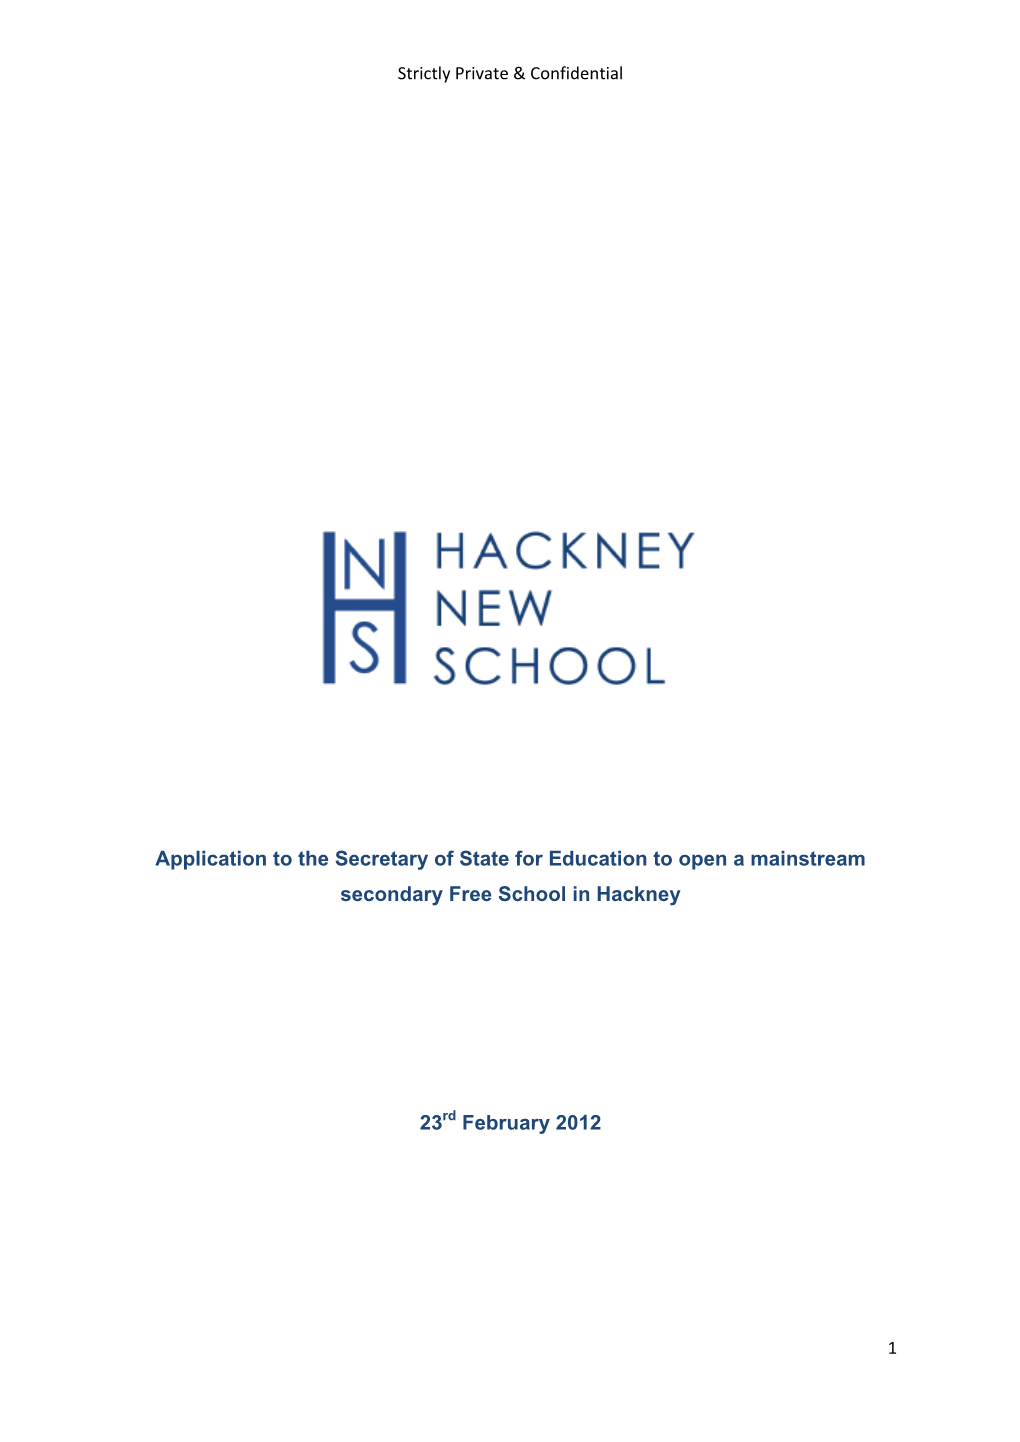 Hackney New School